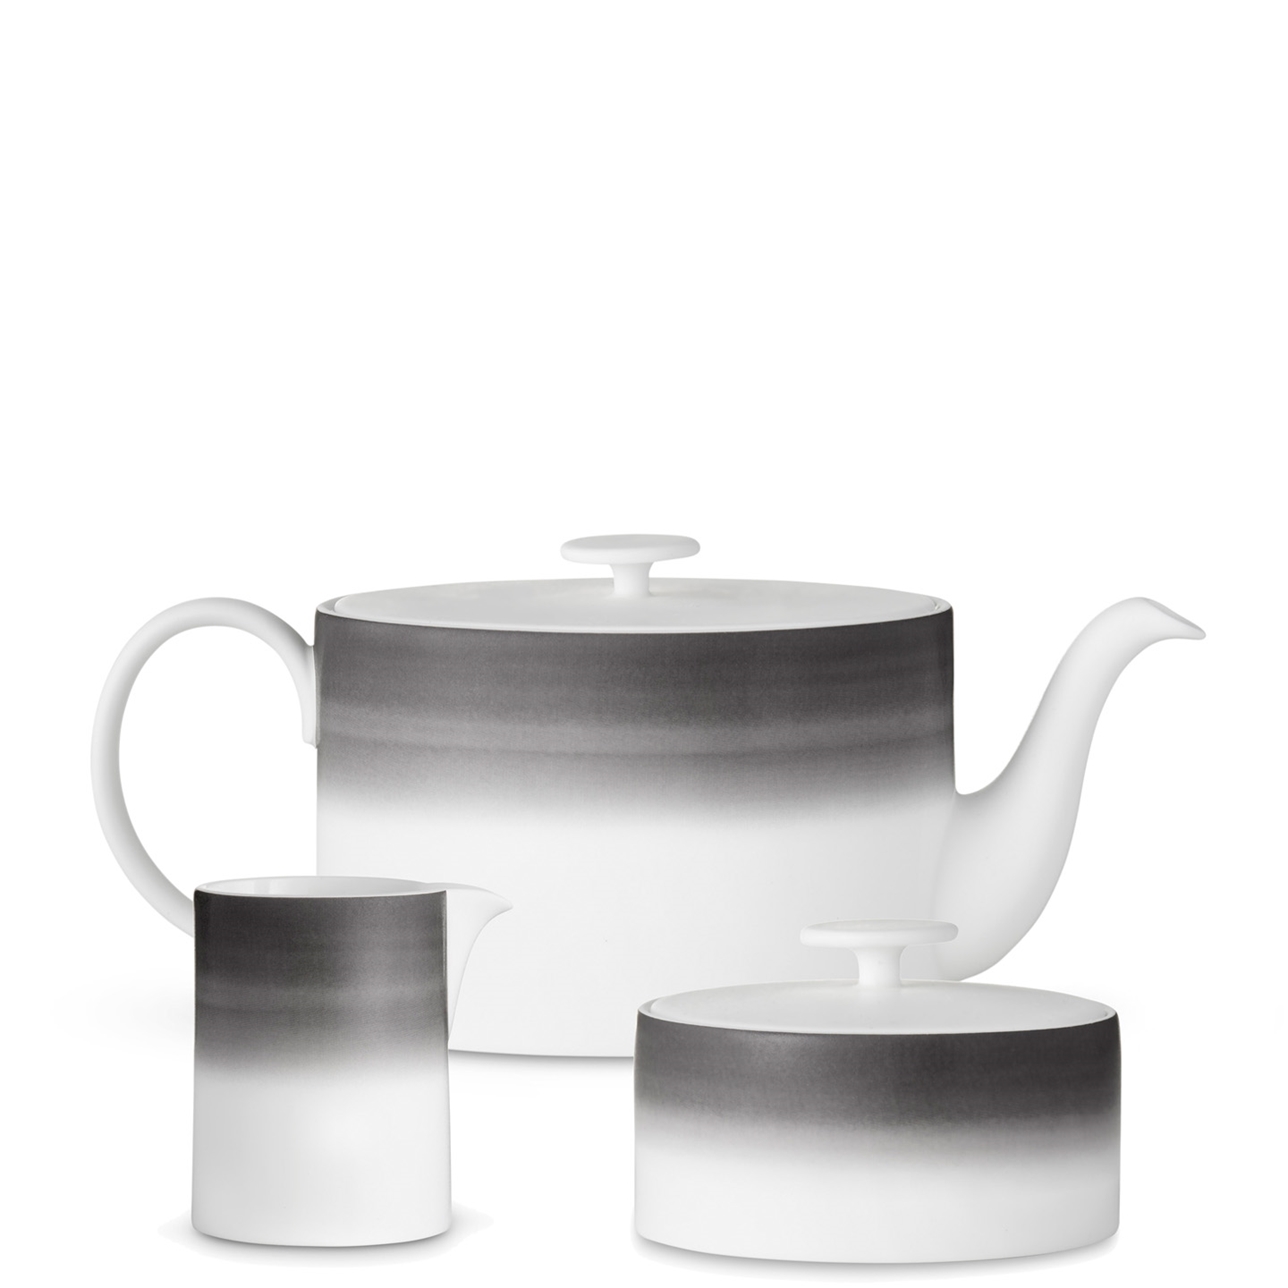 Vera Wang Degradée 3 Piece Set: Teapot, Sugar Box and Milk / Cream Jug